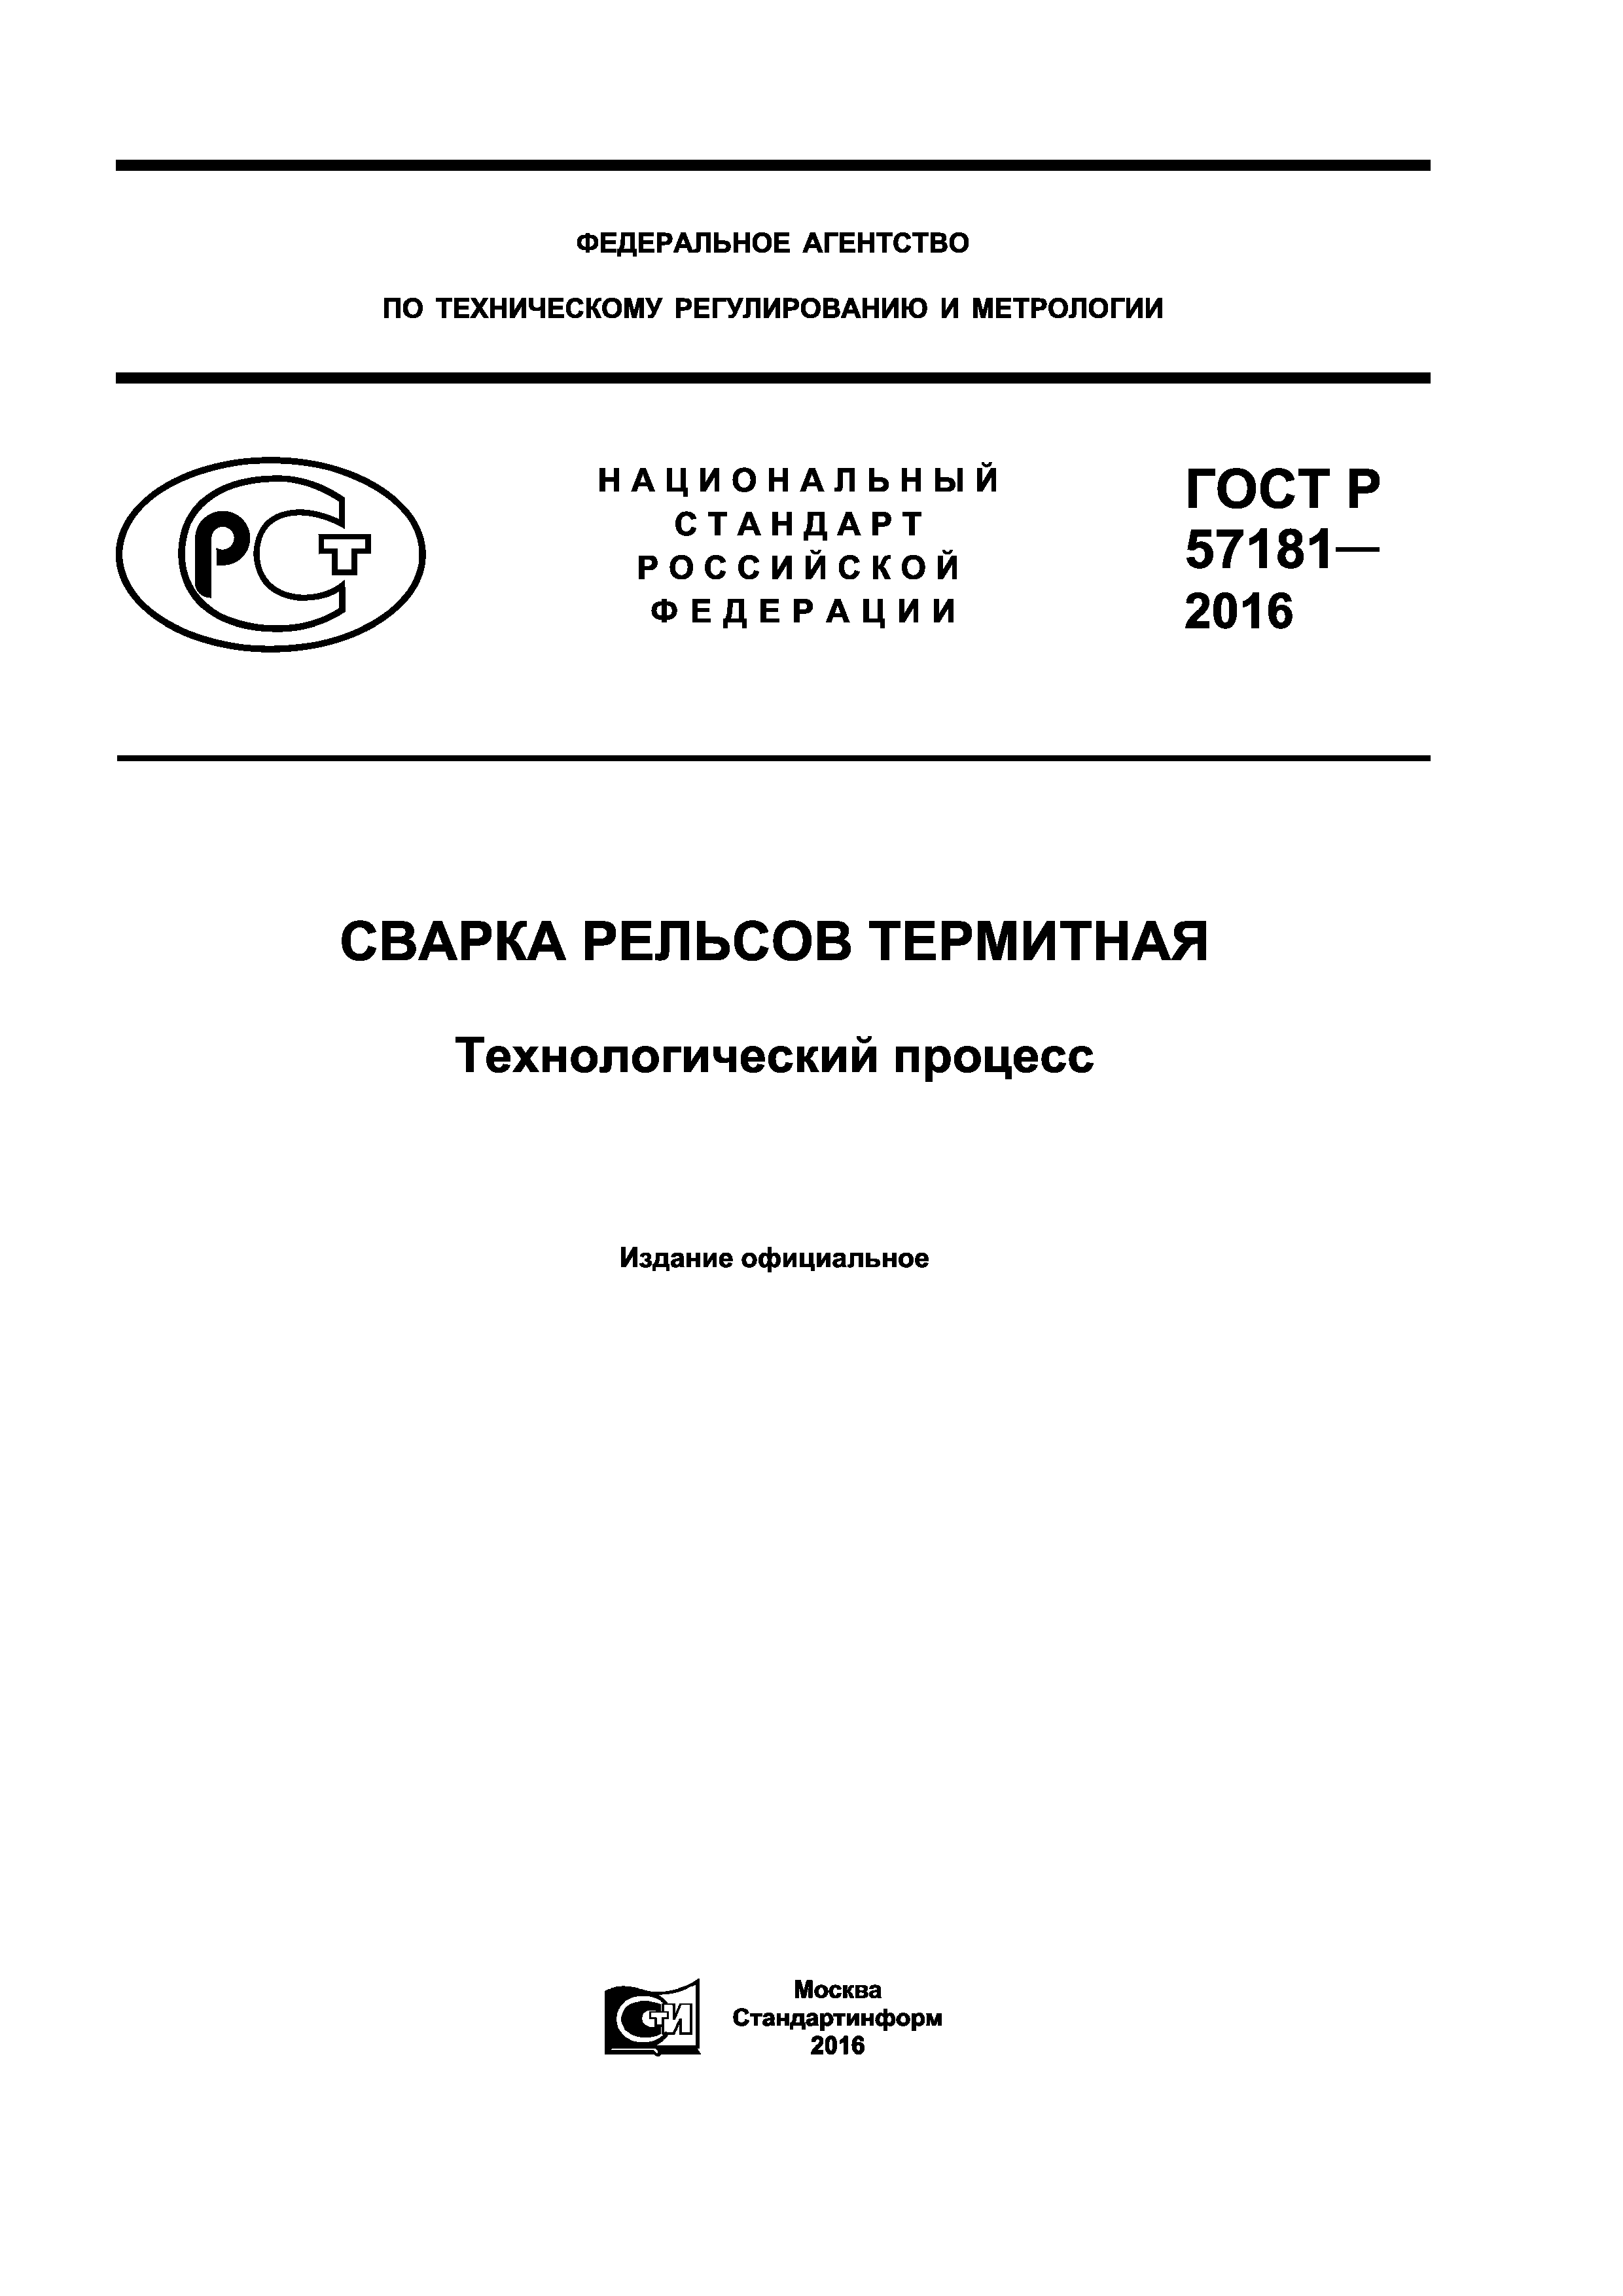 ГОСТ Р 57181-2016